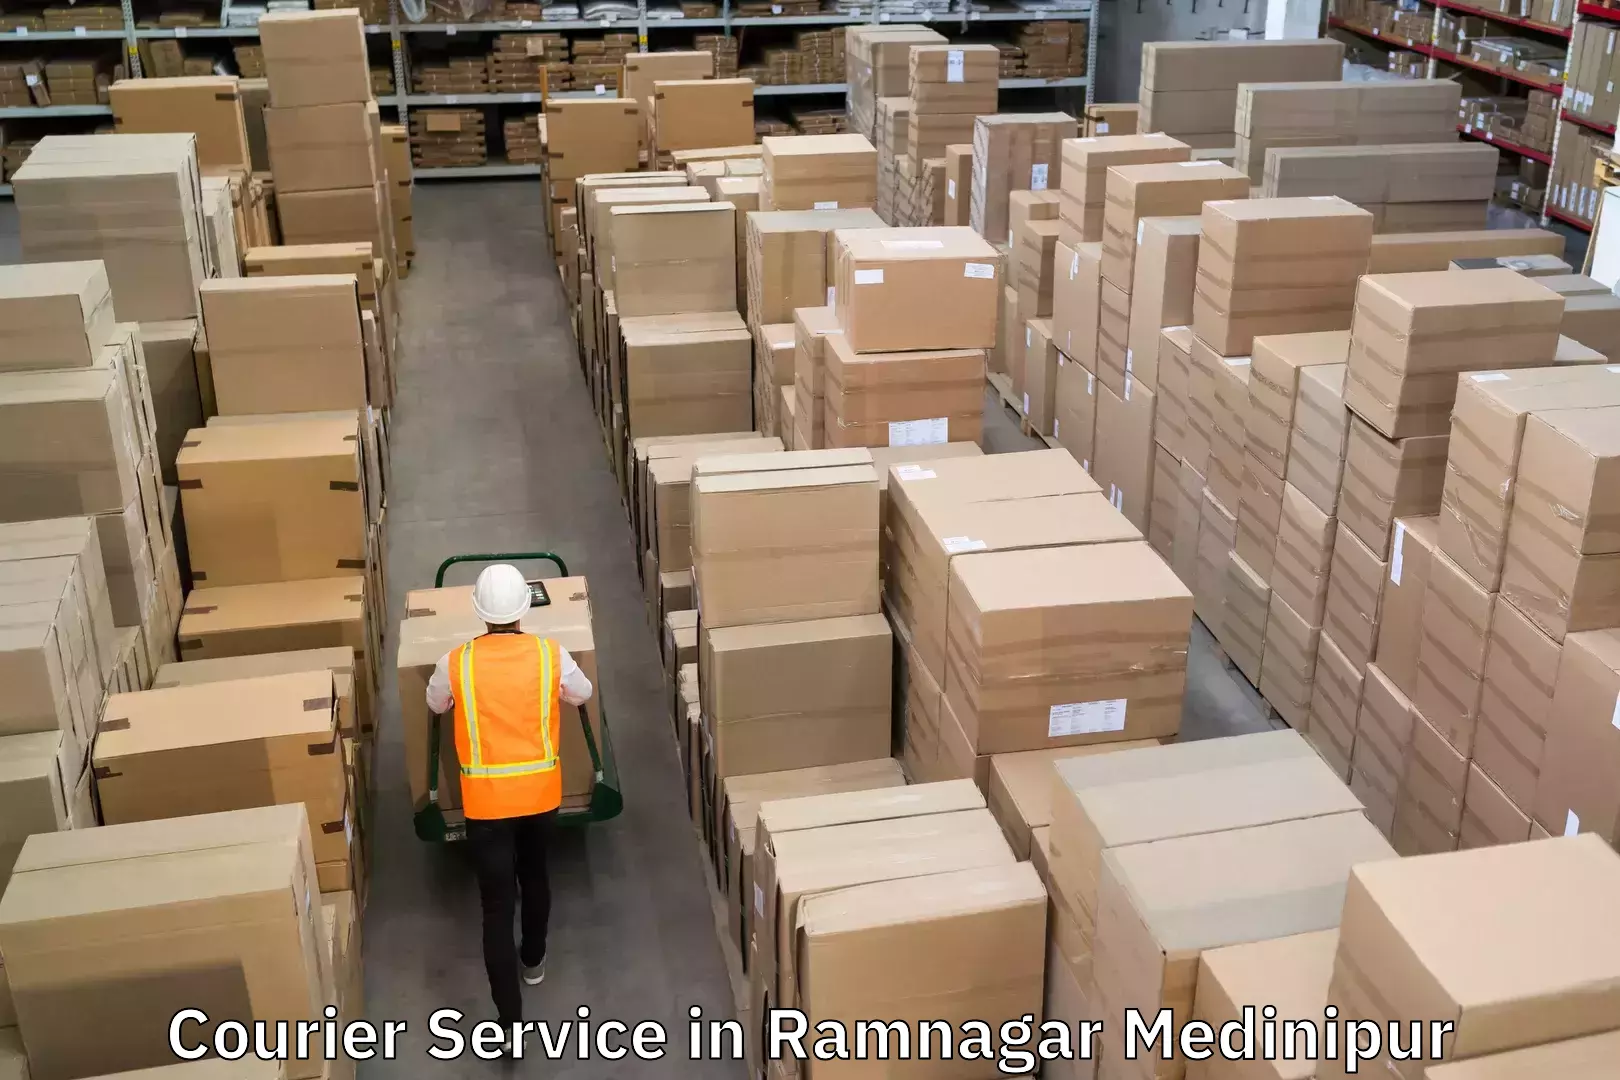 Automated shipping in Ramnagar Medinipur